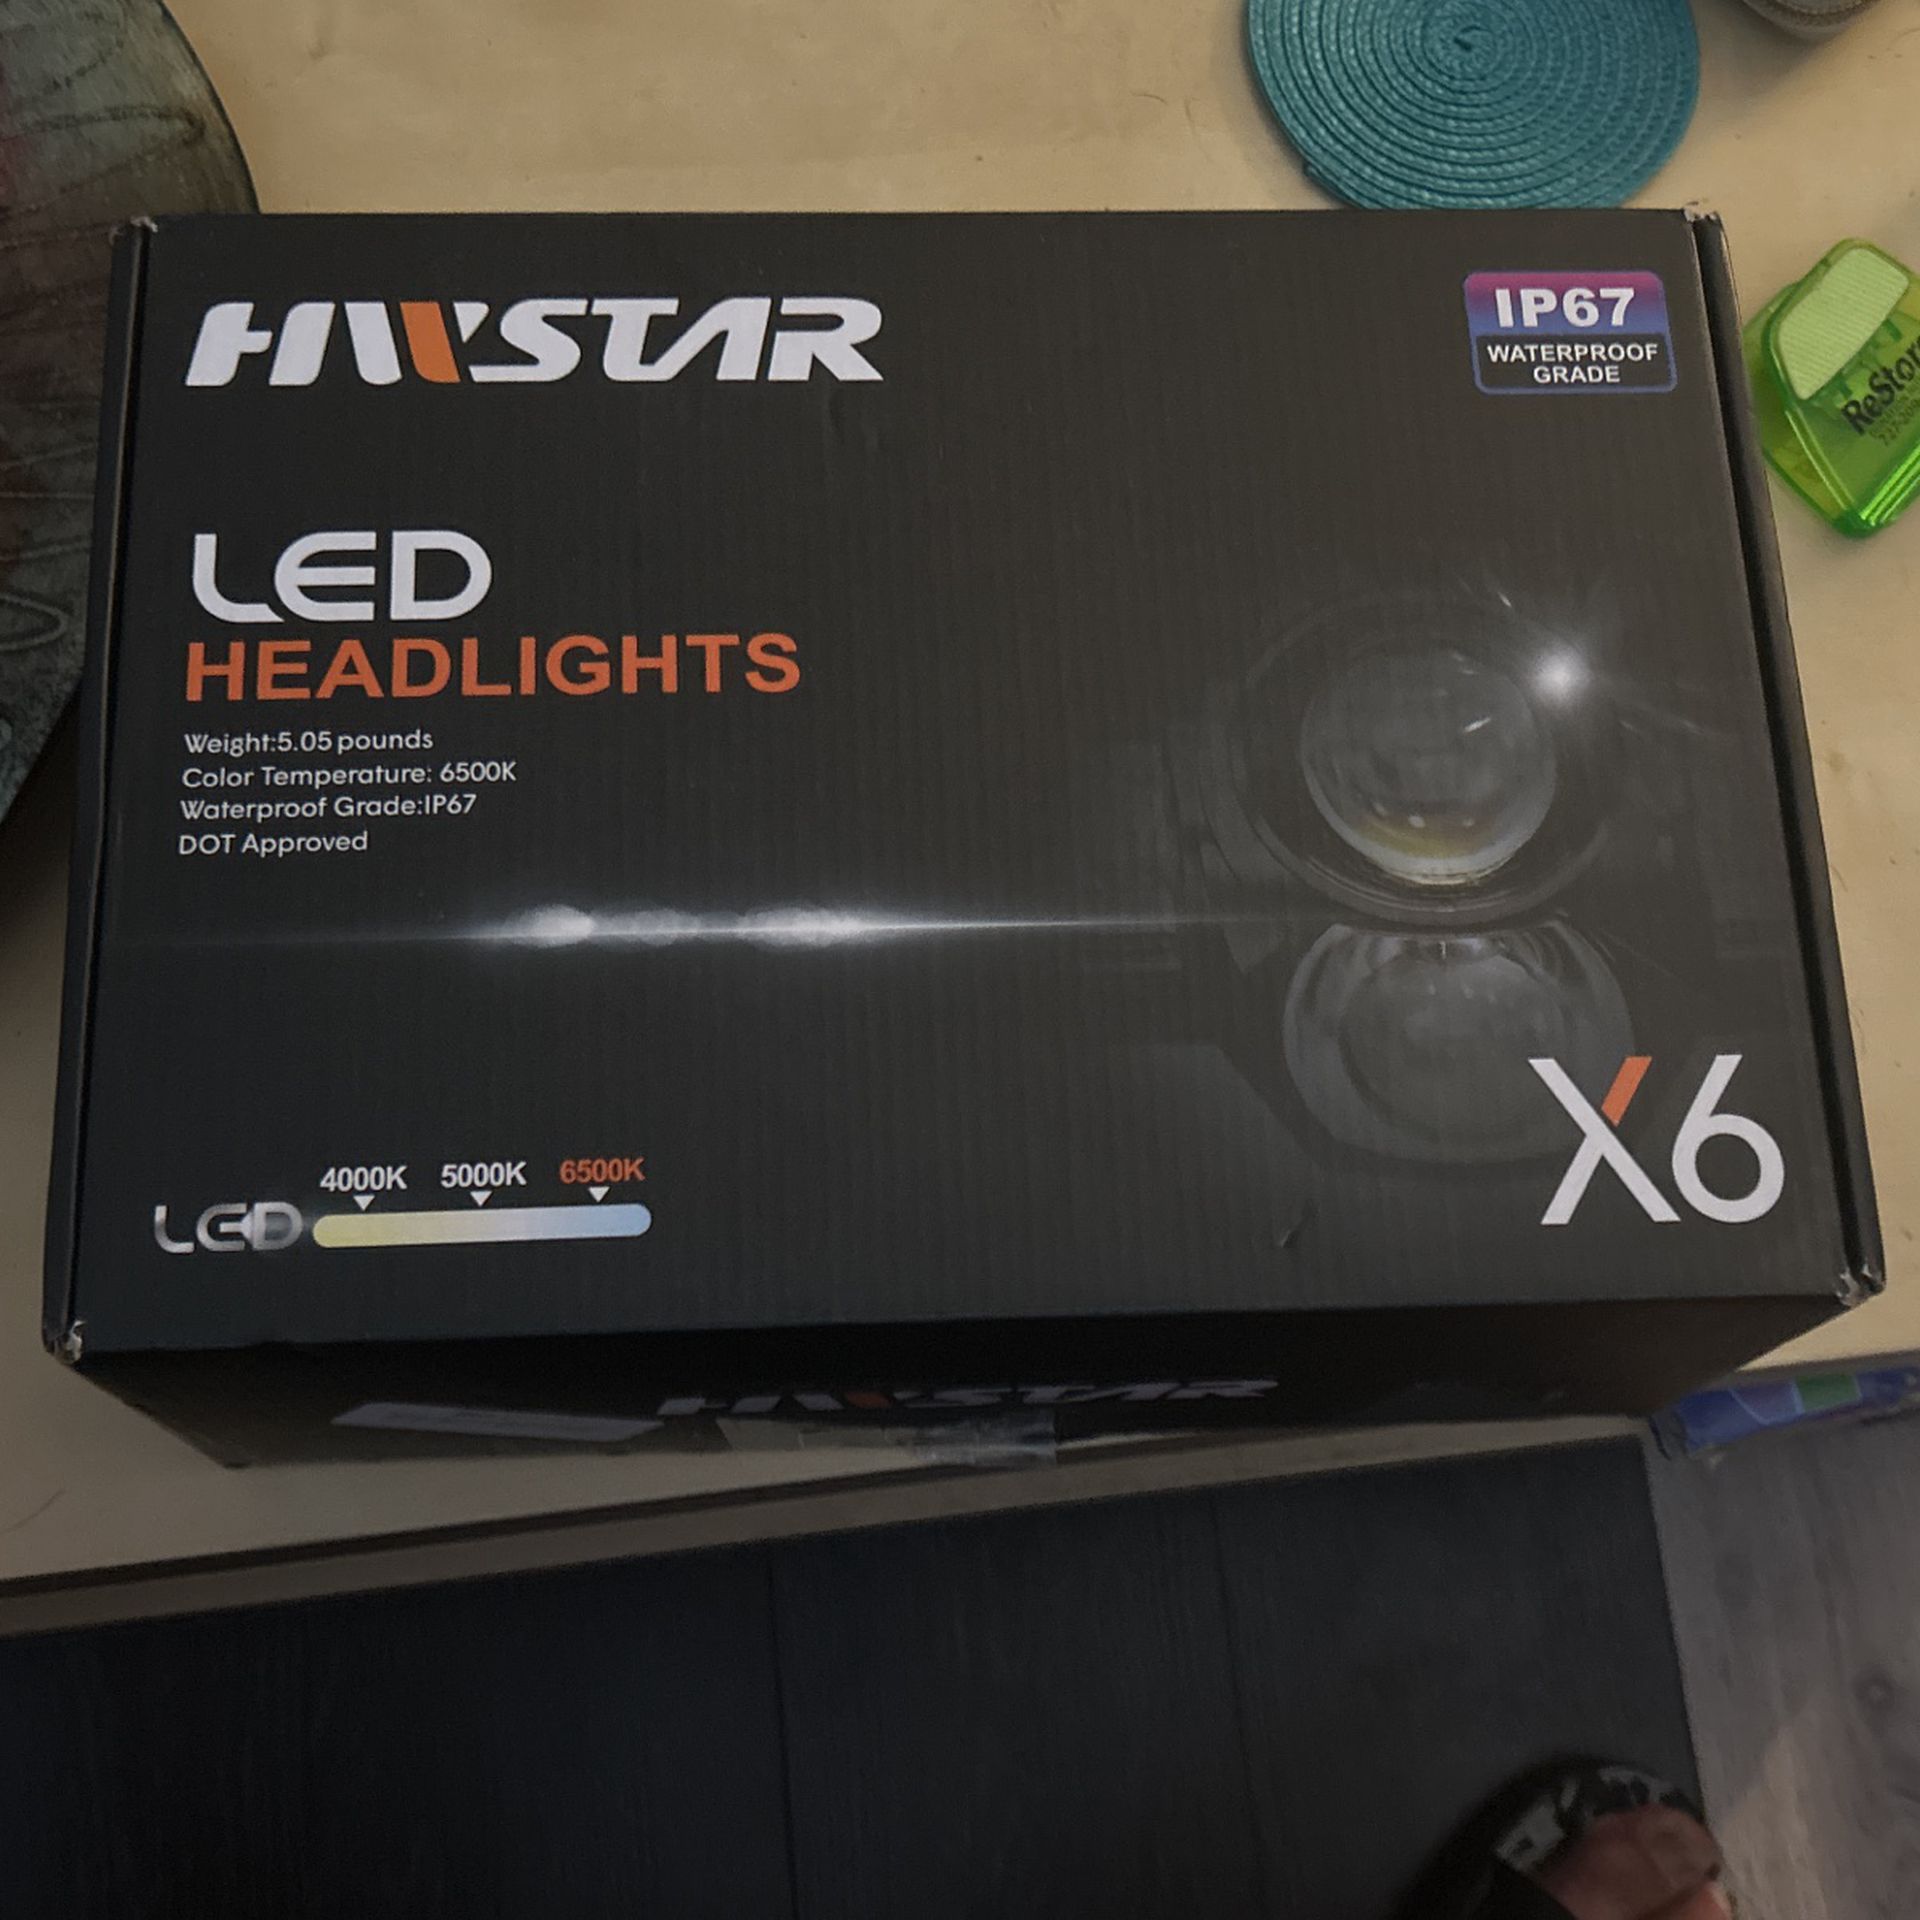 Hwstar LED headlights 